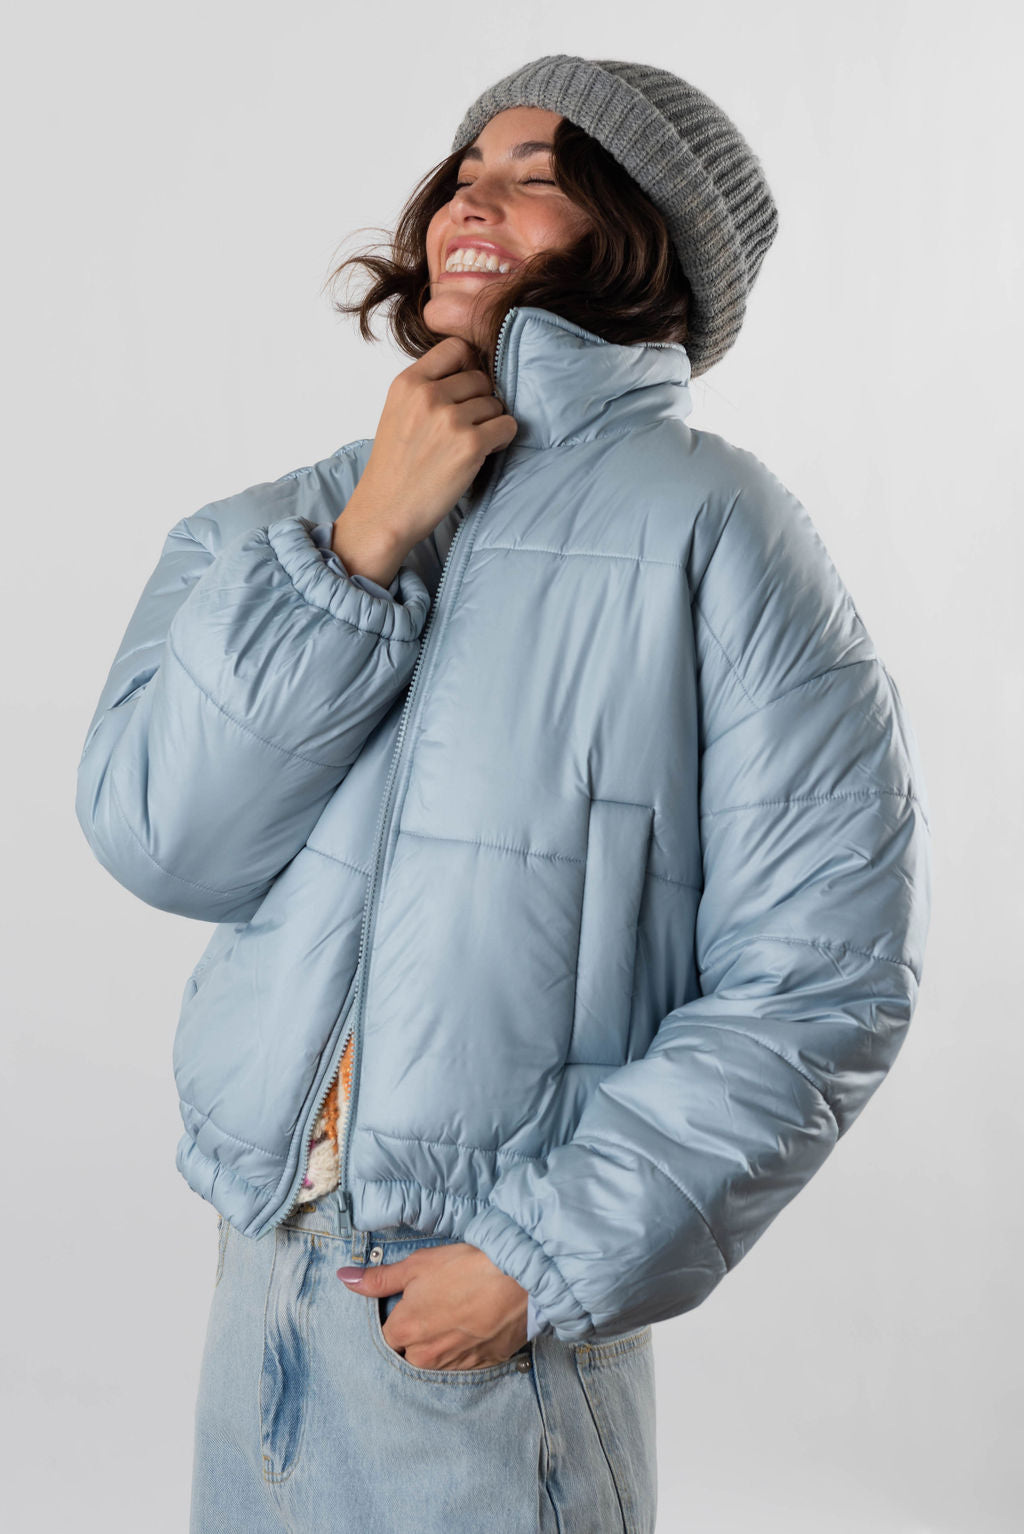 Aspen With Love Puffer Jacket In Ice Blue FINAL SALE